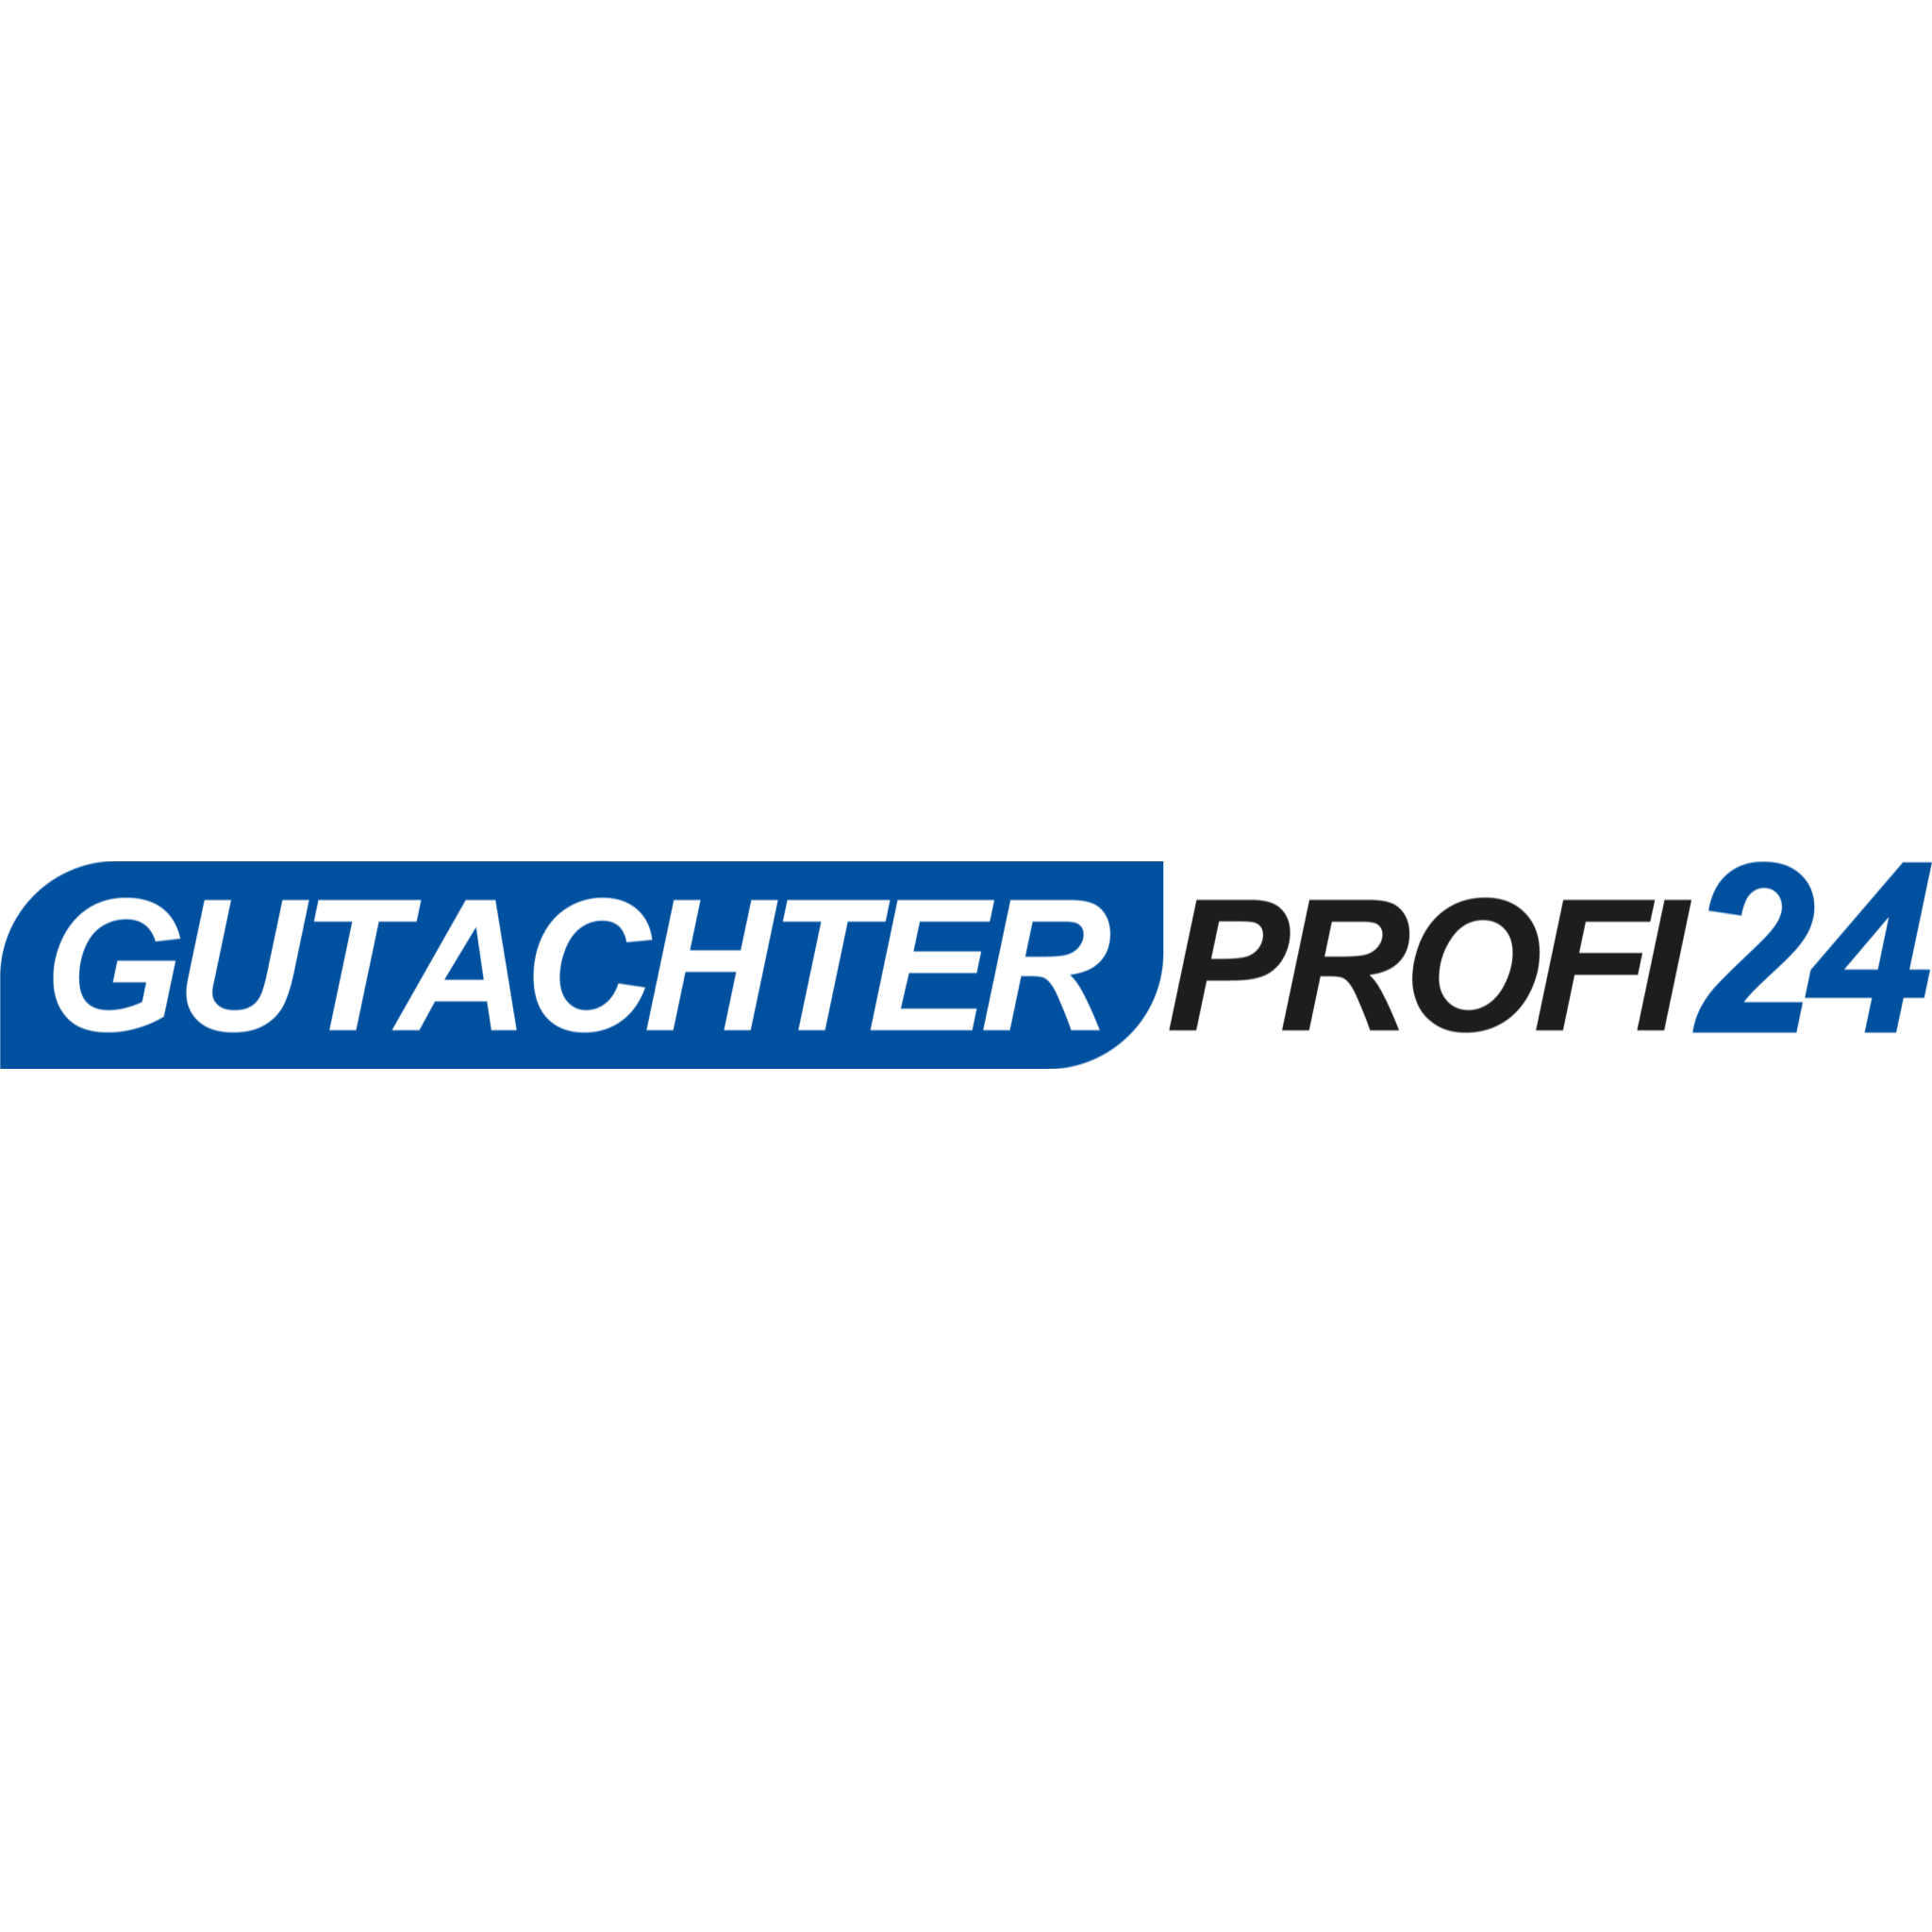 GutachterProfi24 in Hamburg - Logo